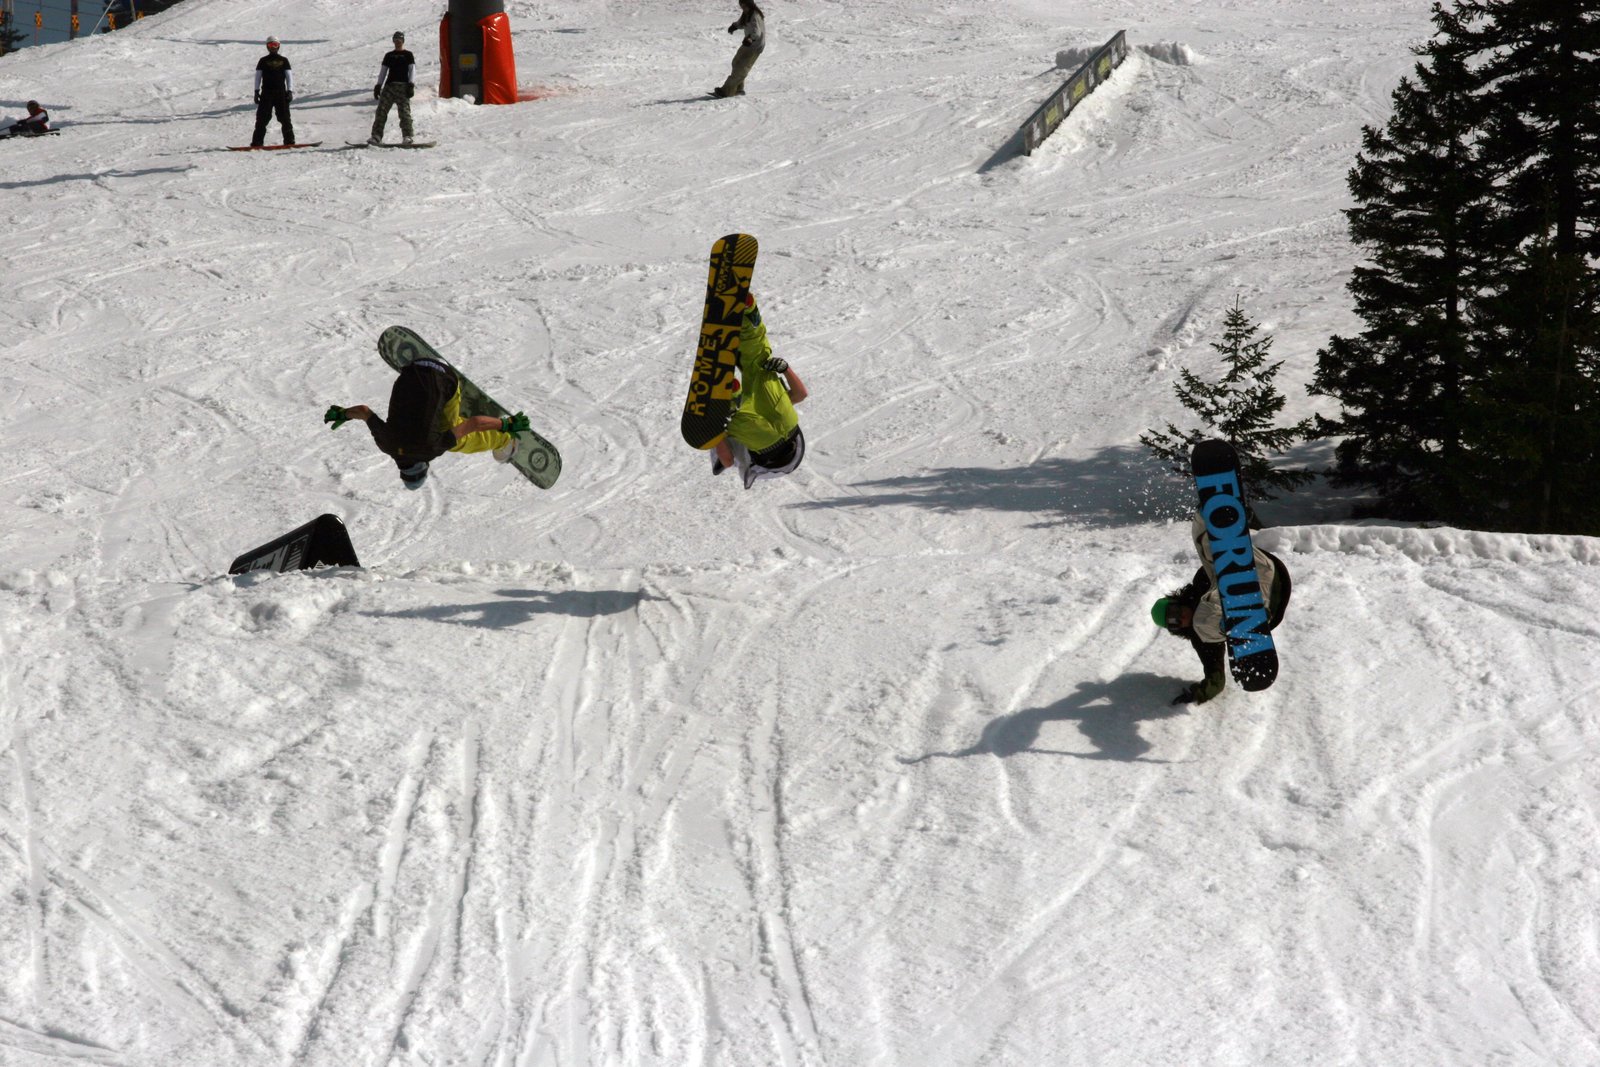 Snowboard 3x knucklefront